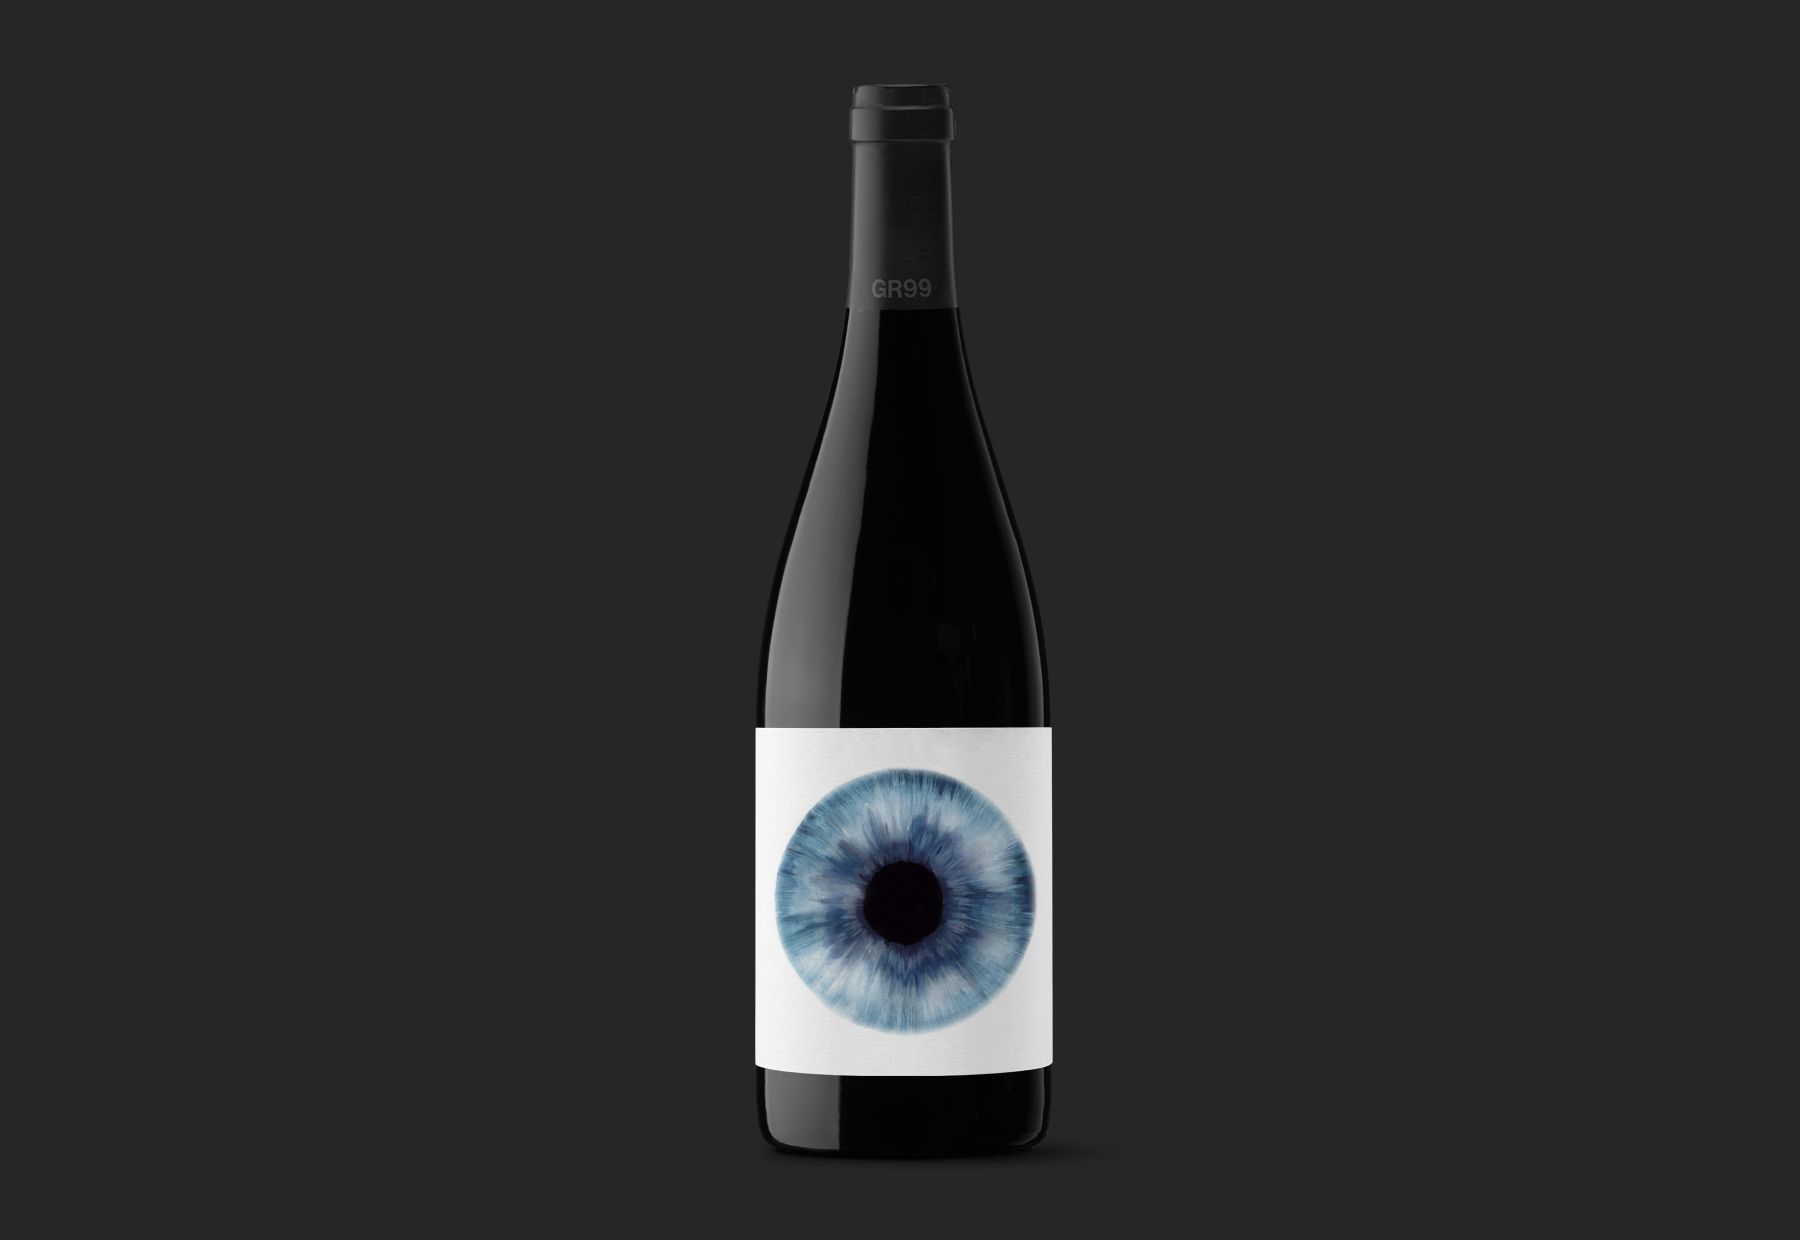 “GR99” an Eye-Catching Wine Designed by Moruba